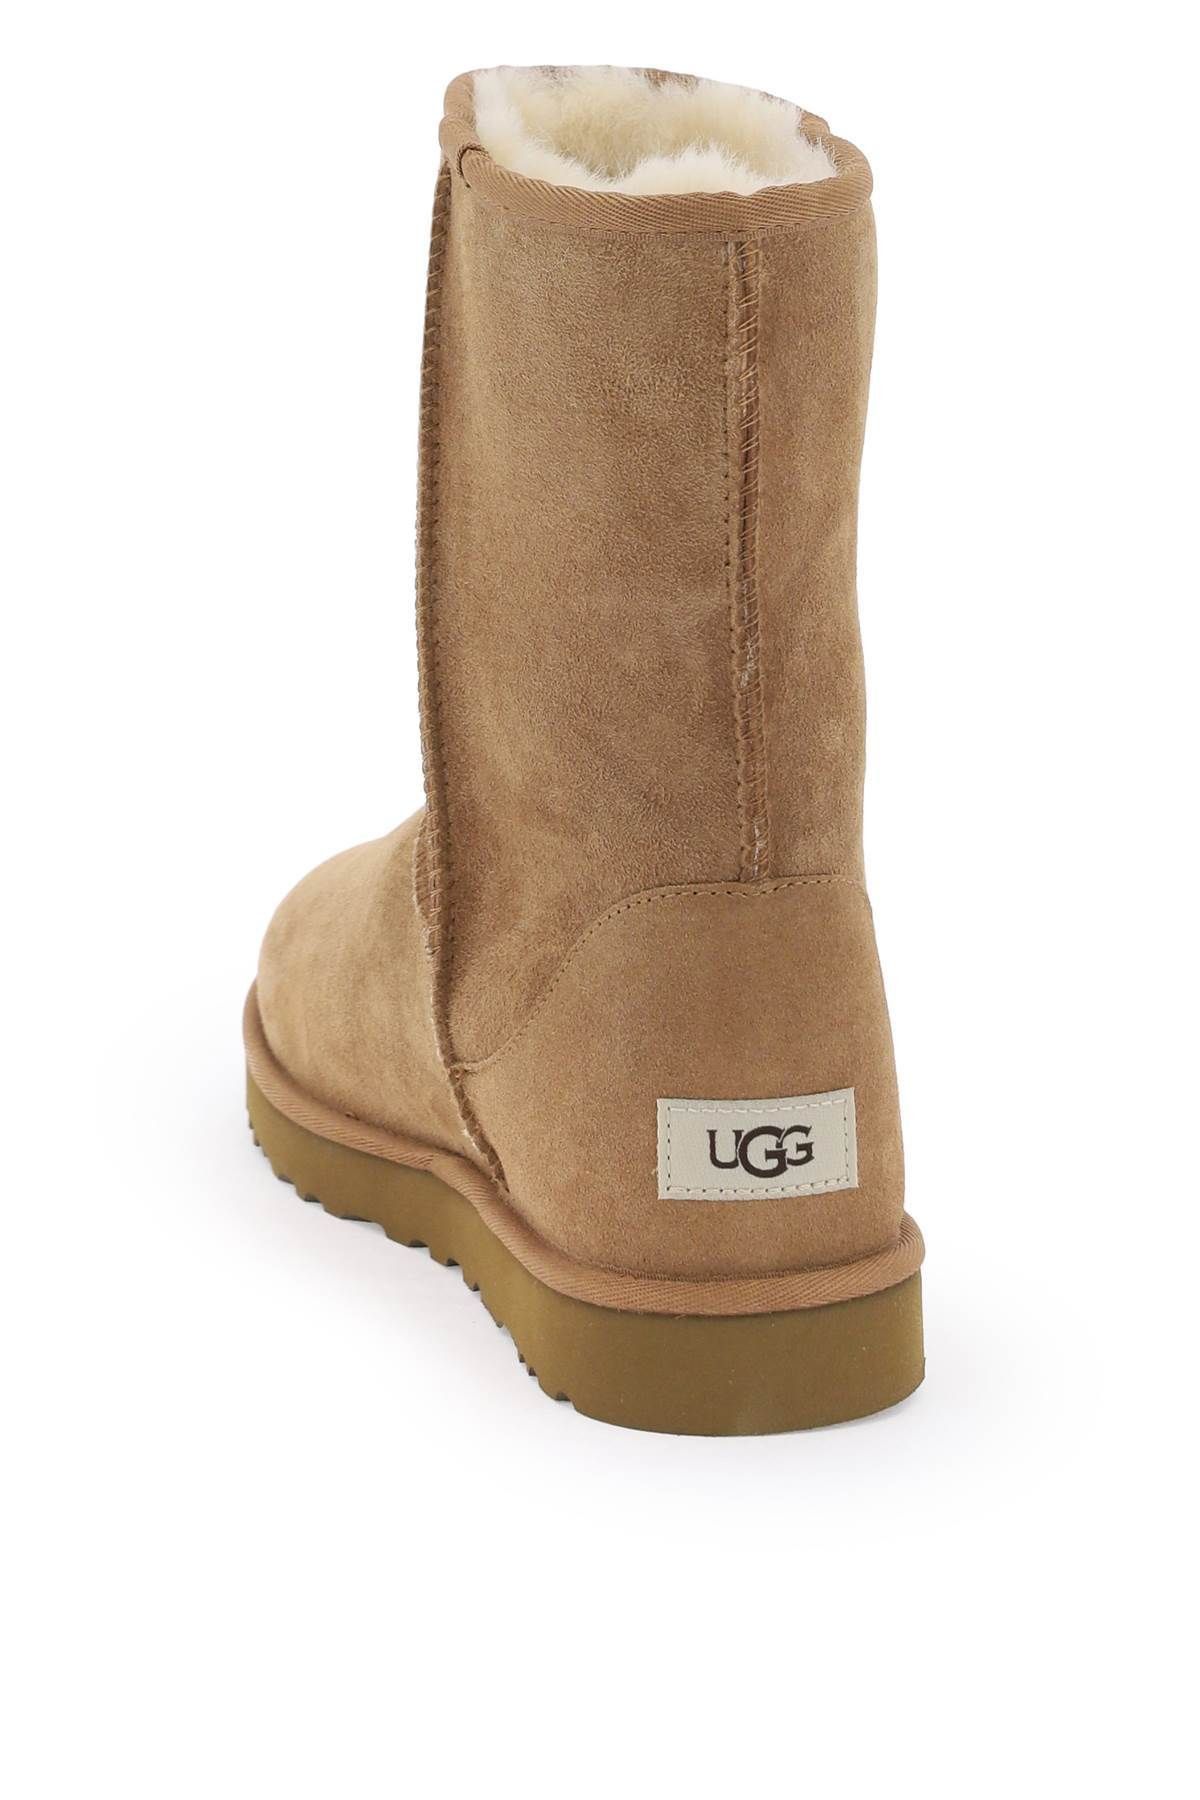 Ugg - Classic Short Boots Size EU 43 for Men - 2